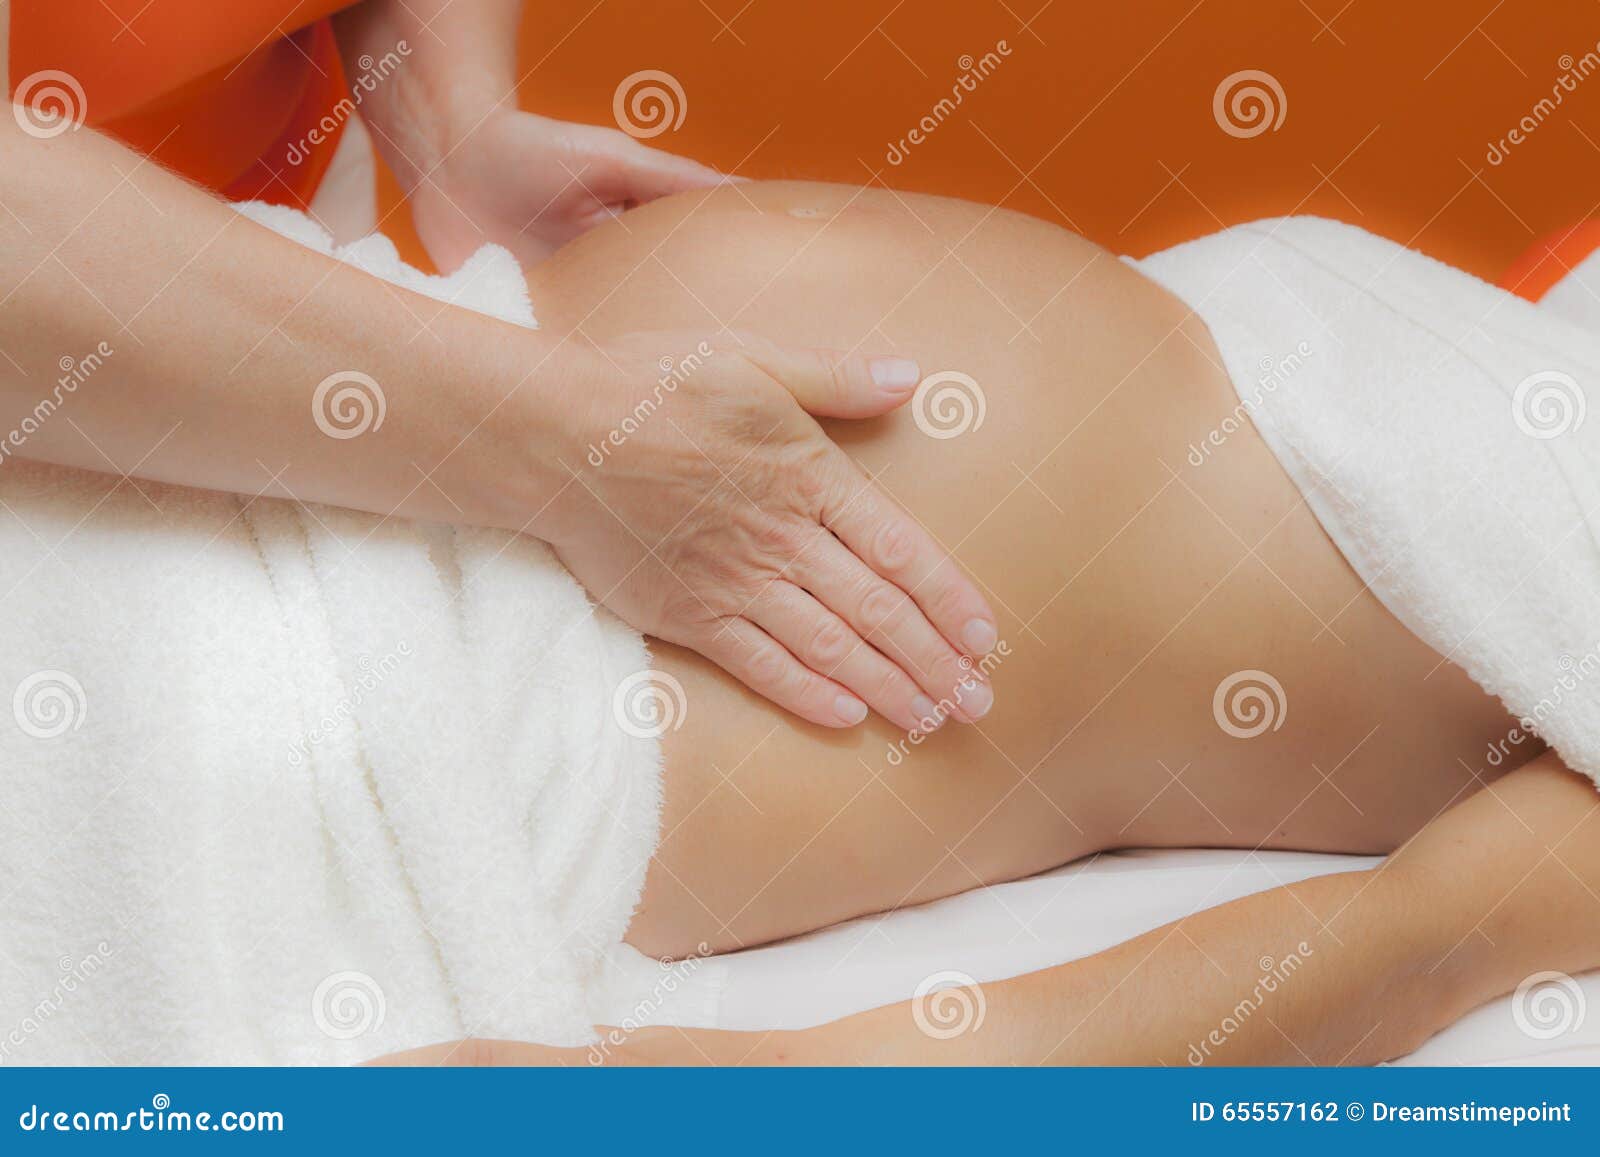 Busty latina massage 4 158 Latina Woman Skin Photos Free Royalty Free Stock Photos From Dreamstime